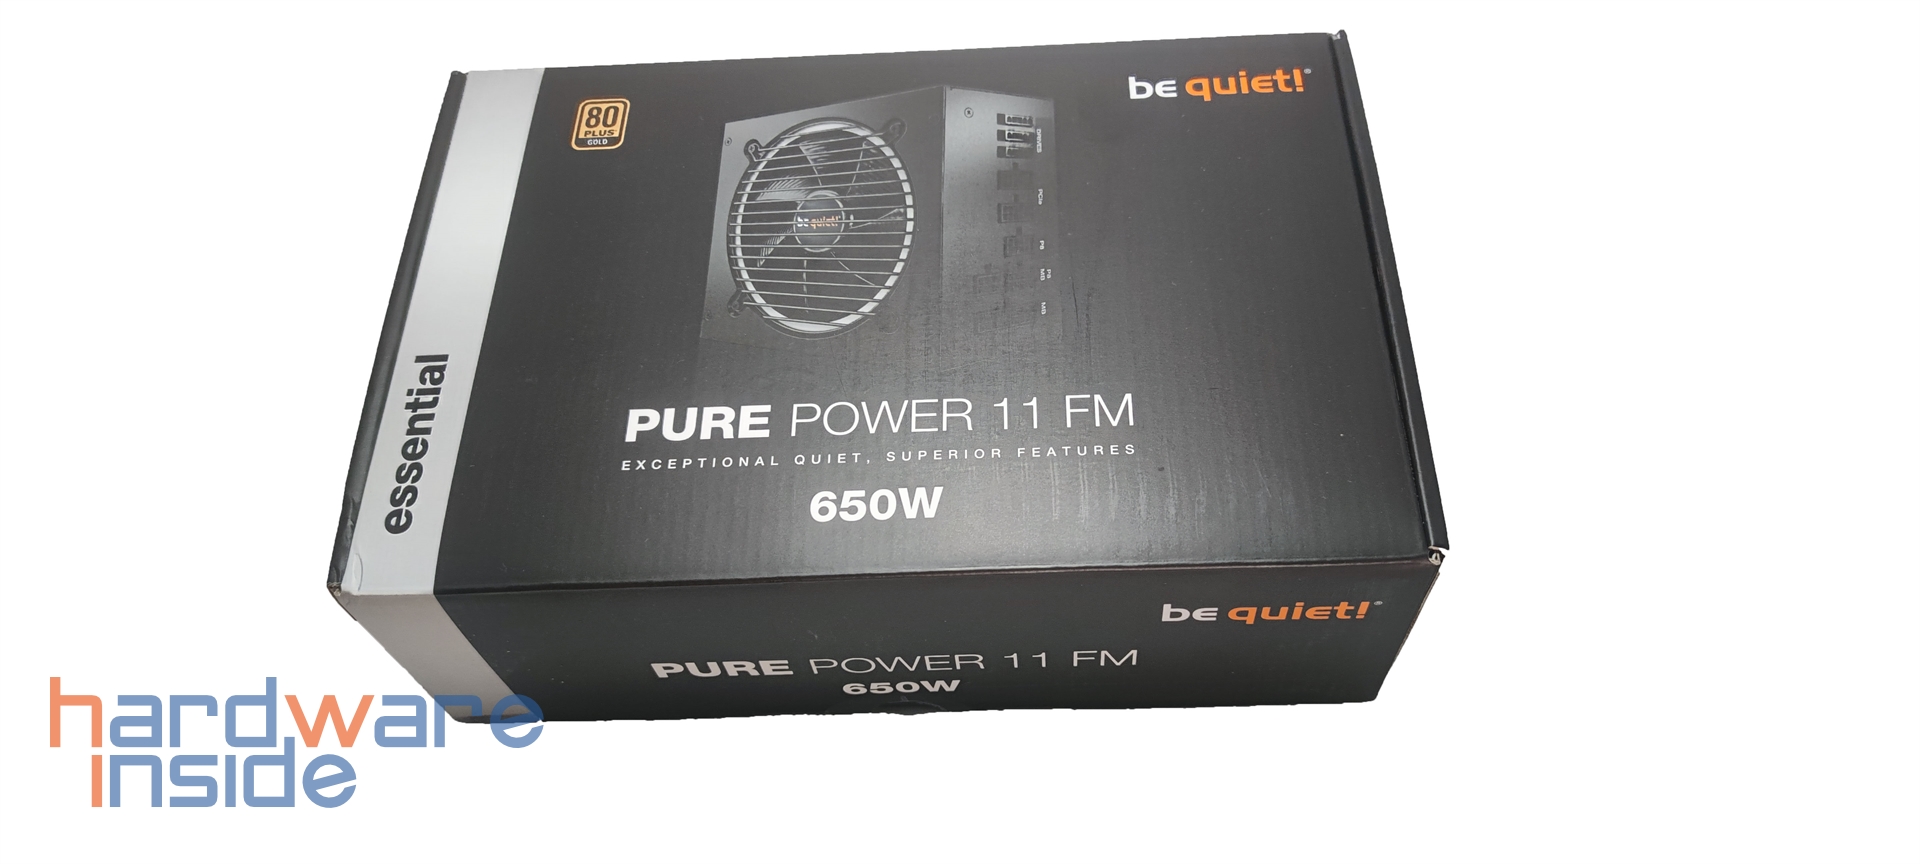 be quiet!-pure-power-11-fm-verpackung (5).jpg